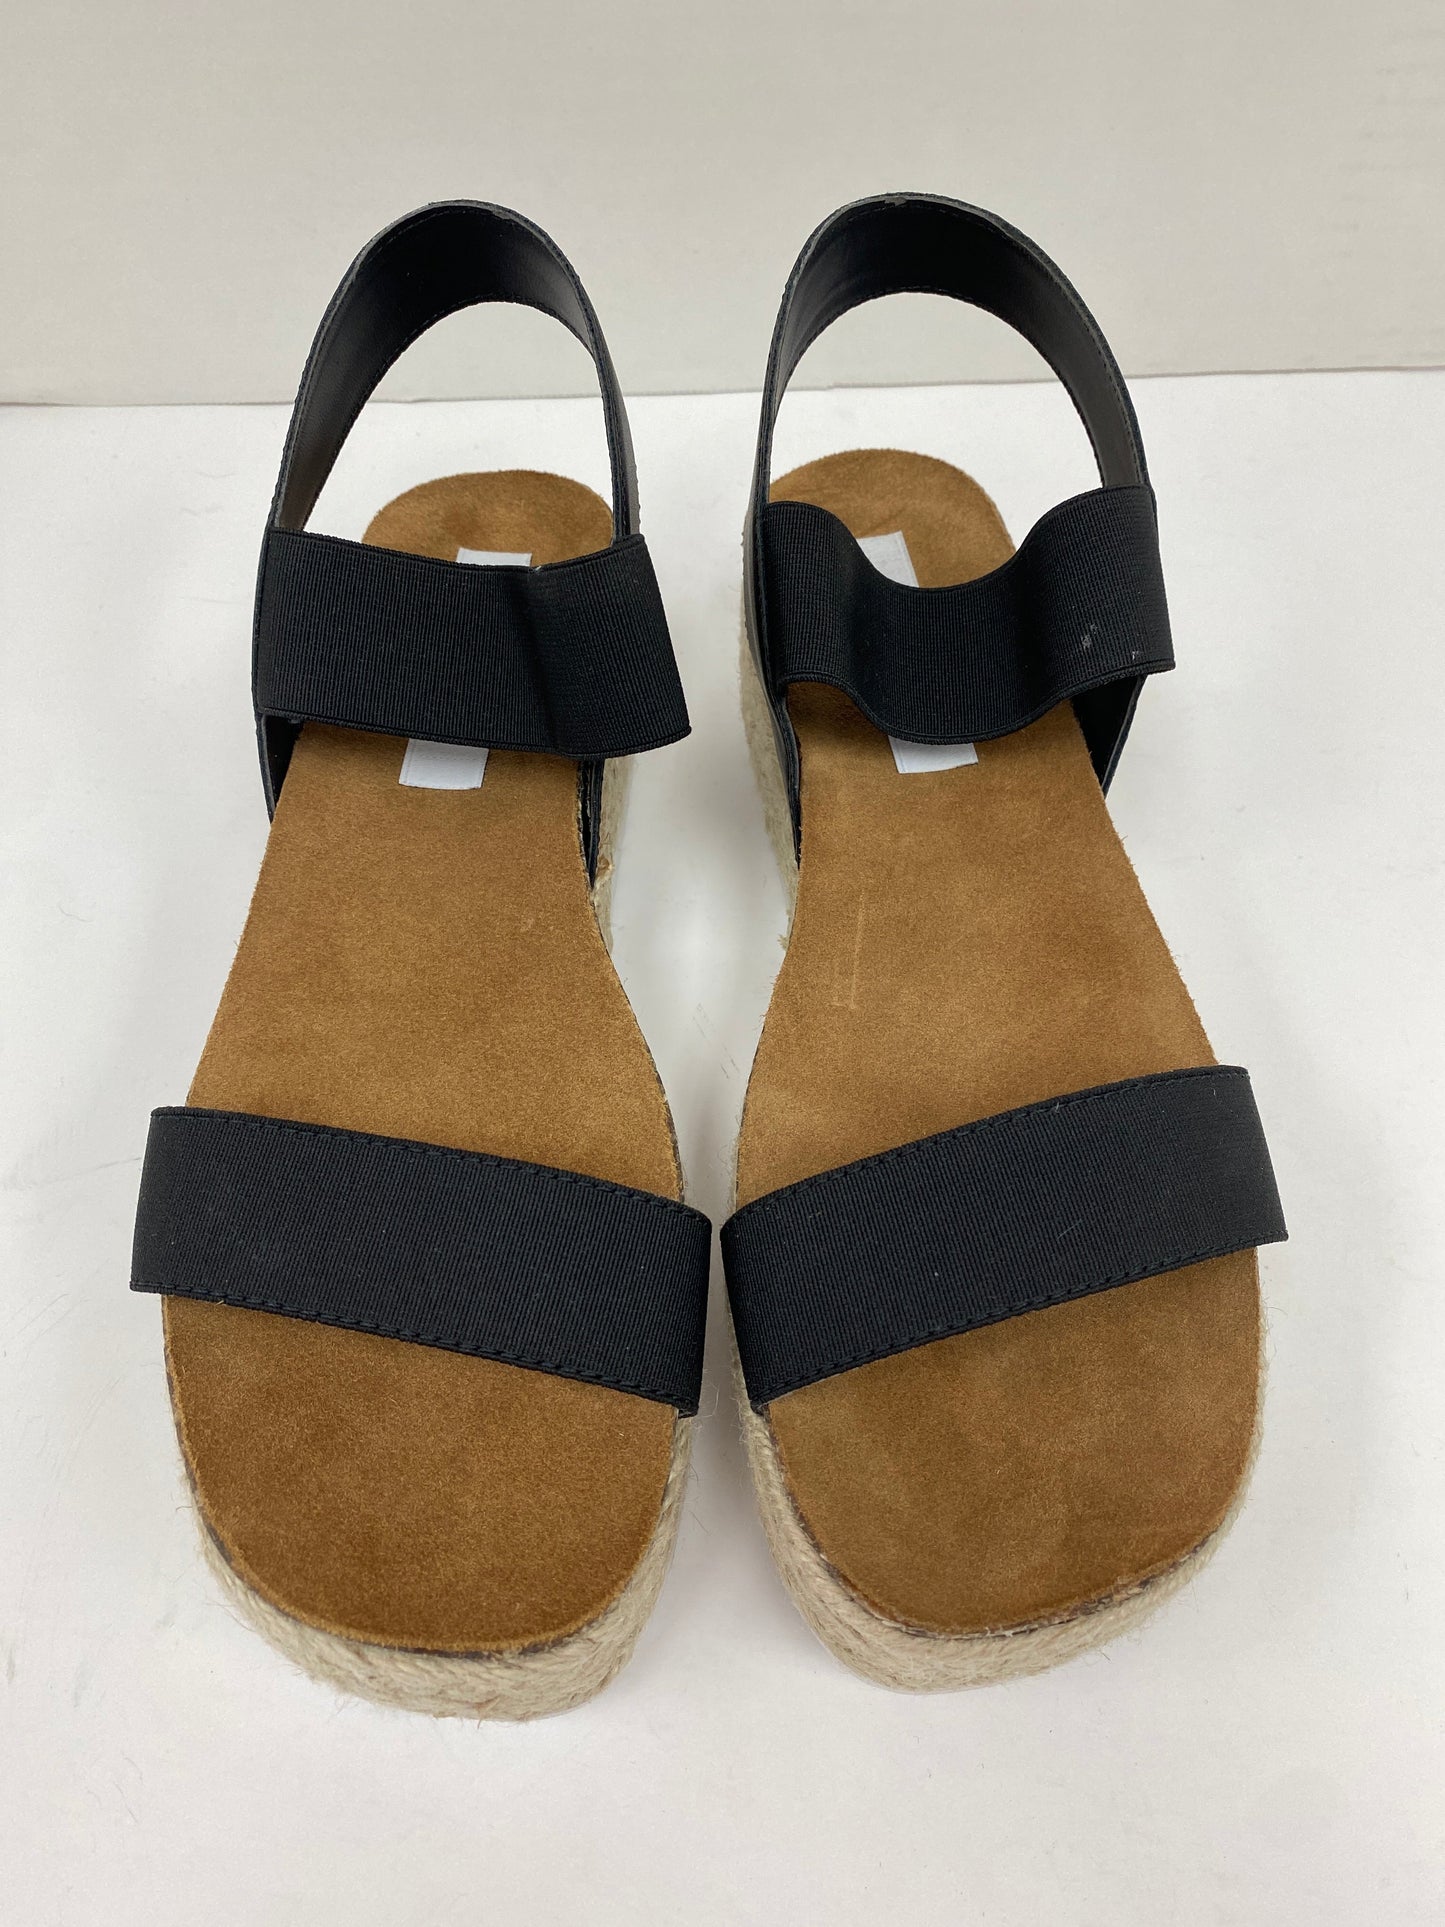 Black Sandals Flats Steve Madden, Size 8